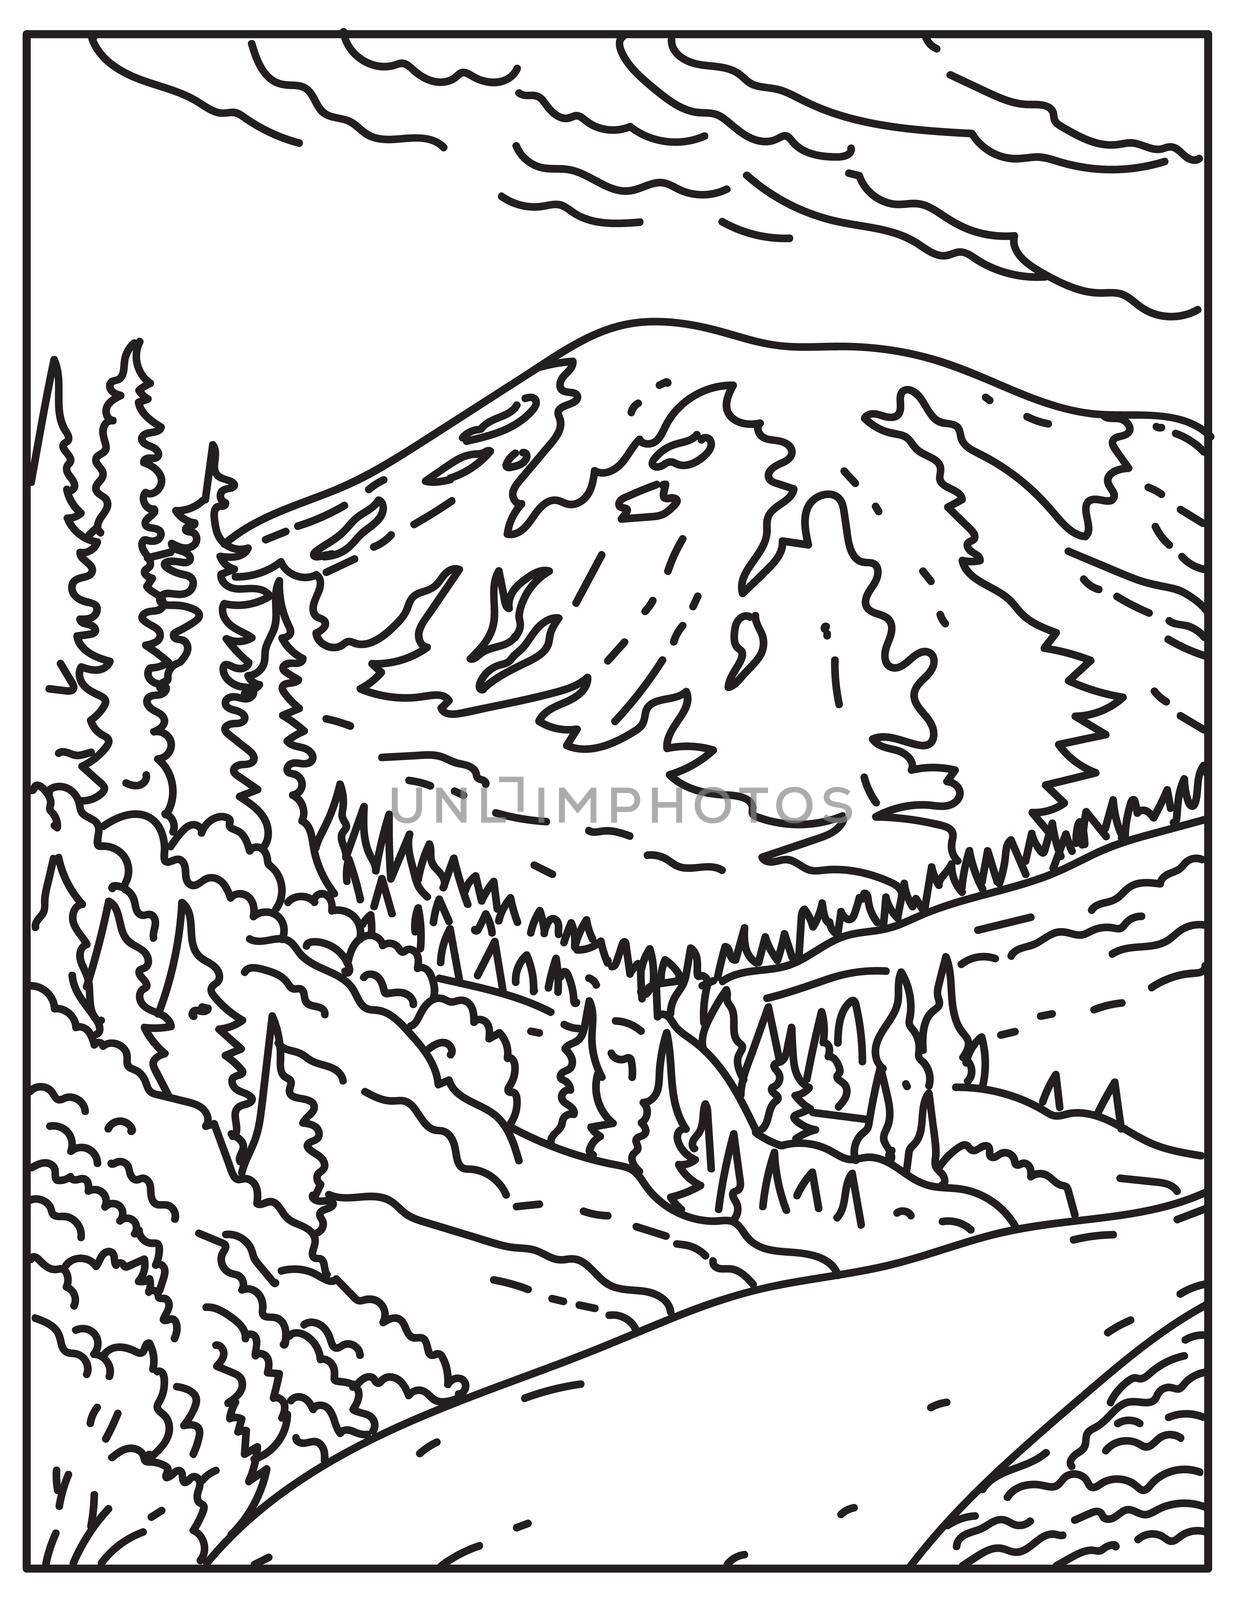 Mount Rainier in Mount Rainier National Park Located in Washington State United States Mono Line or Monoline Black and White Line Art by patrimonio